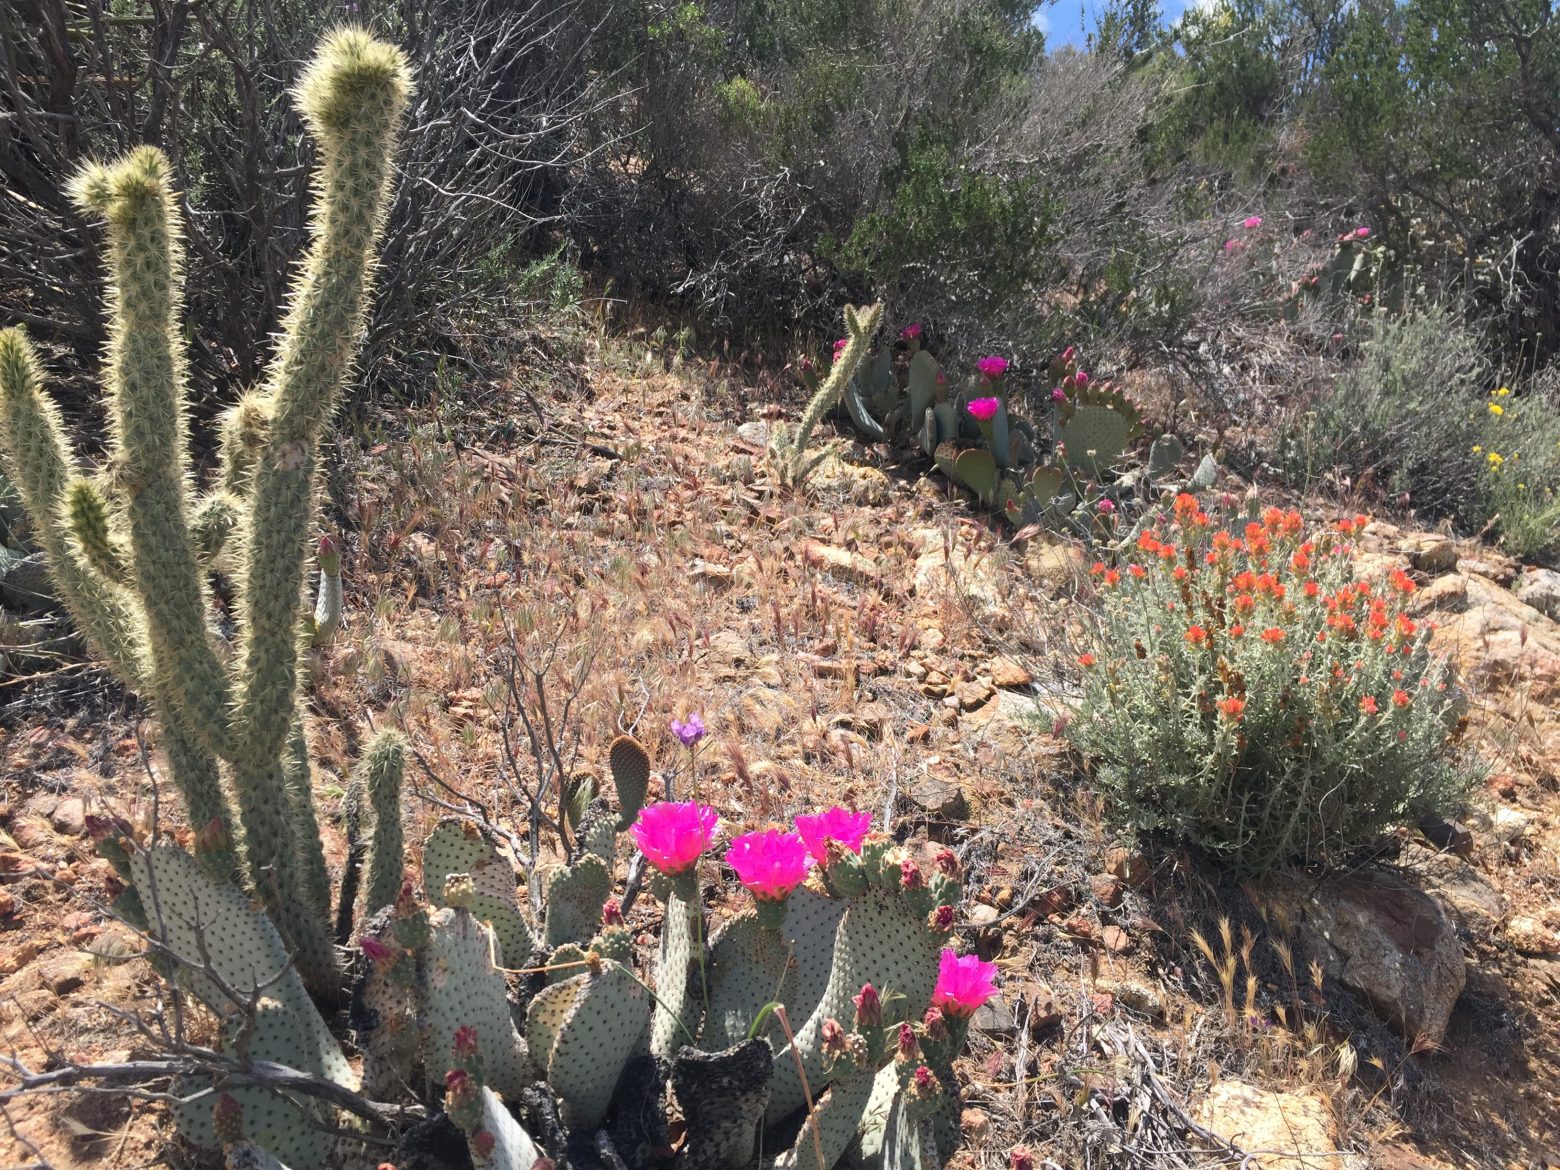 Beavertail cactus in full bloom